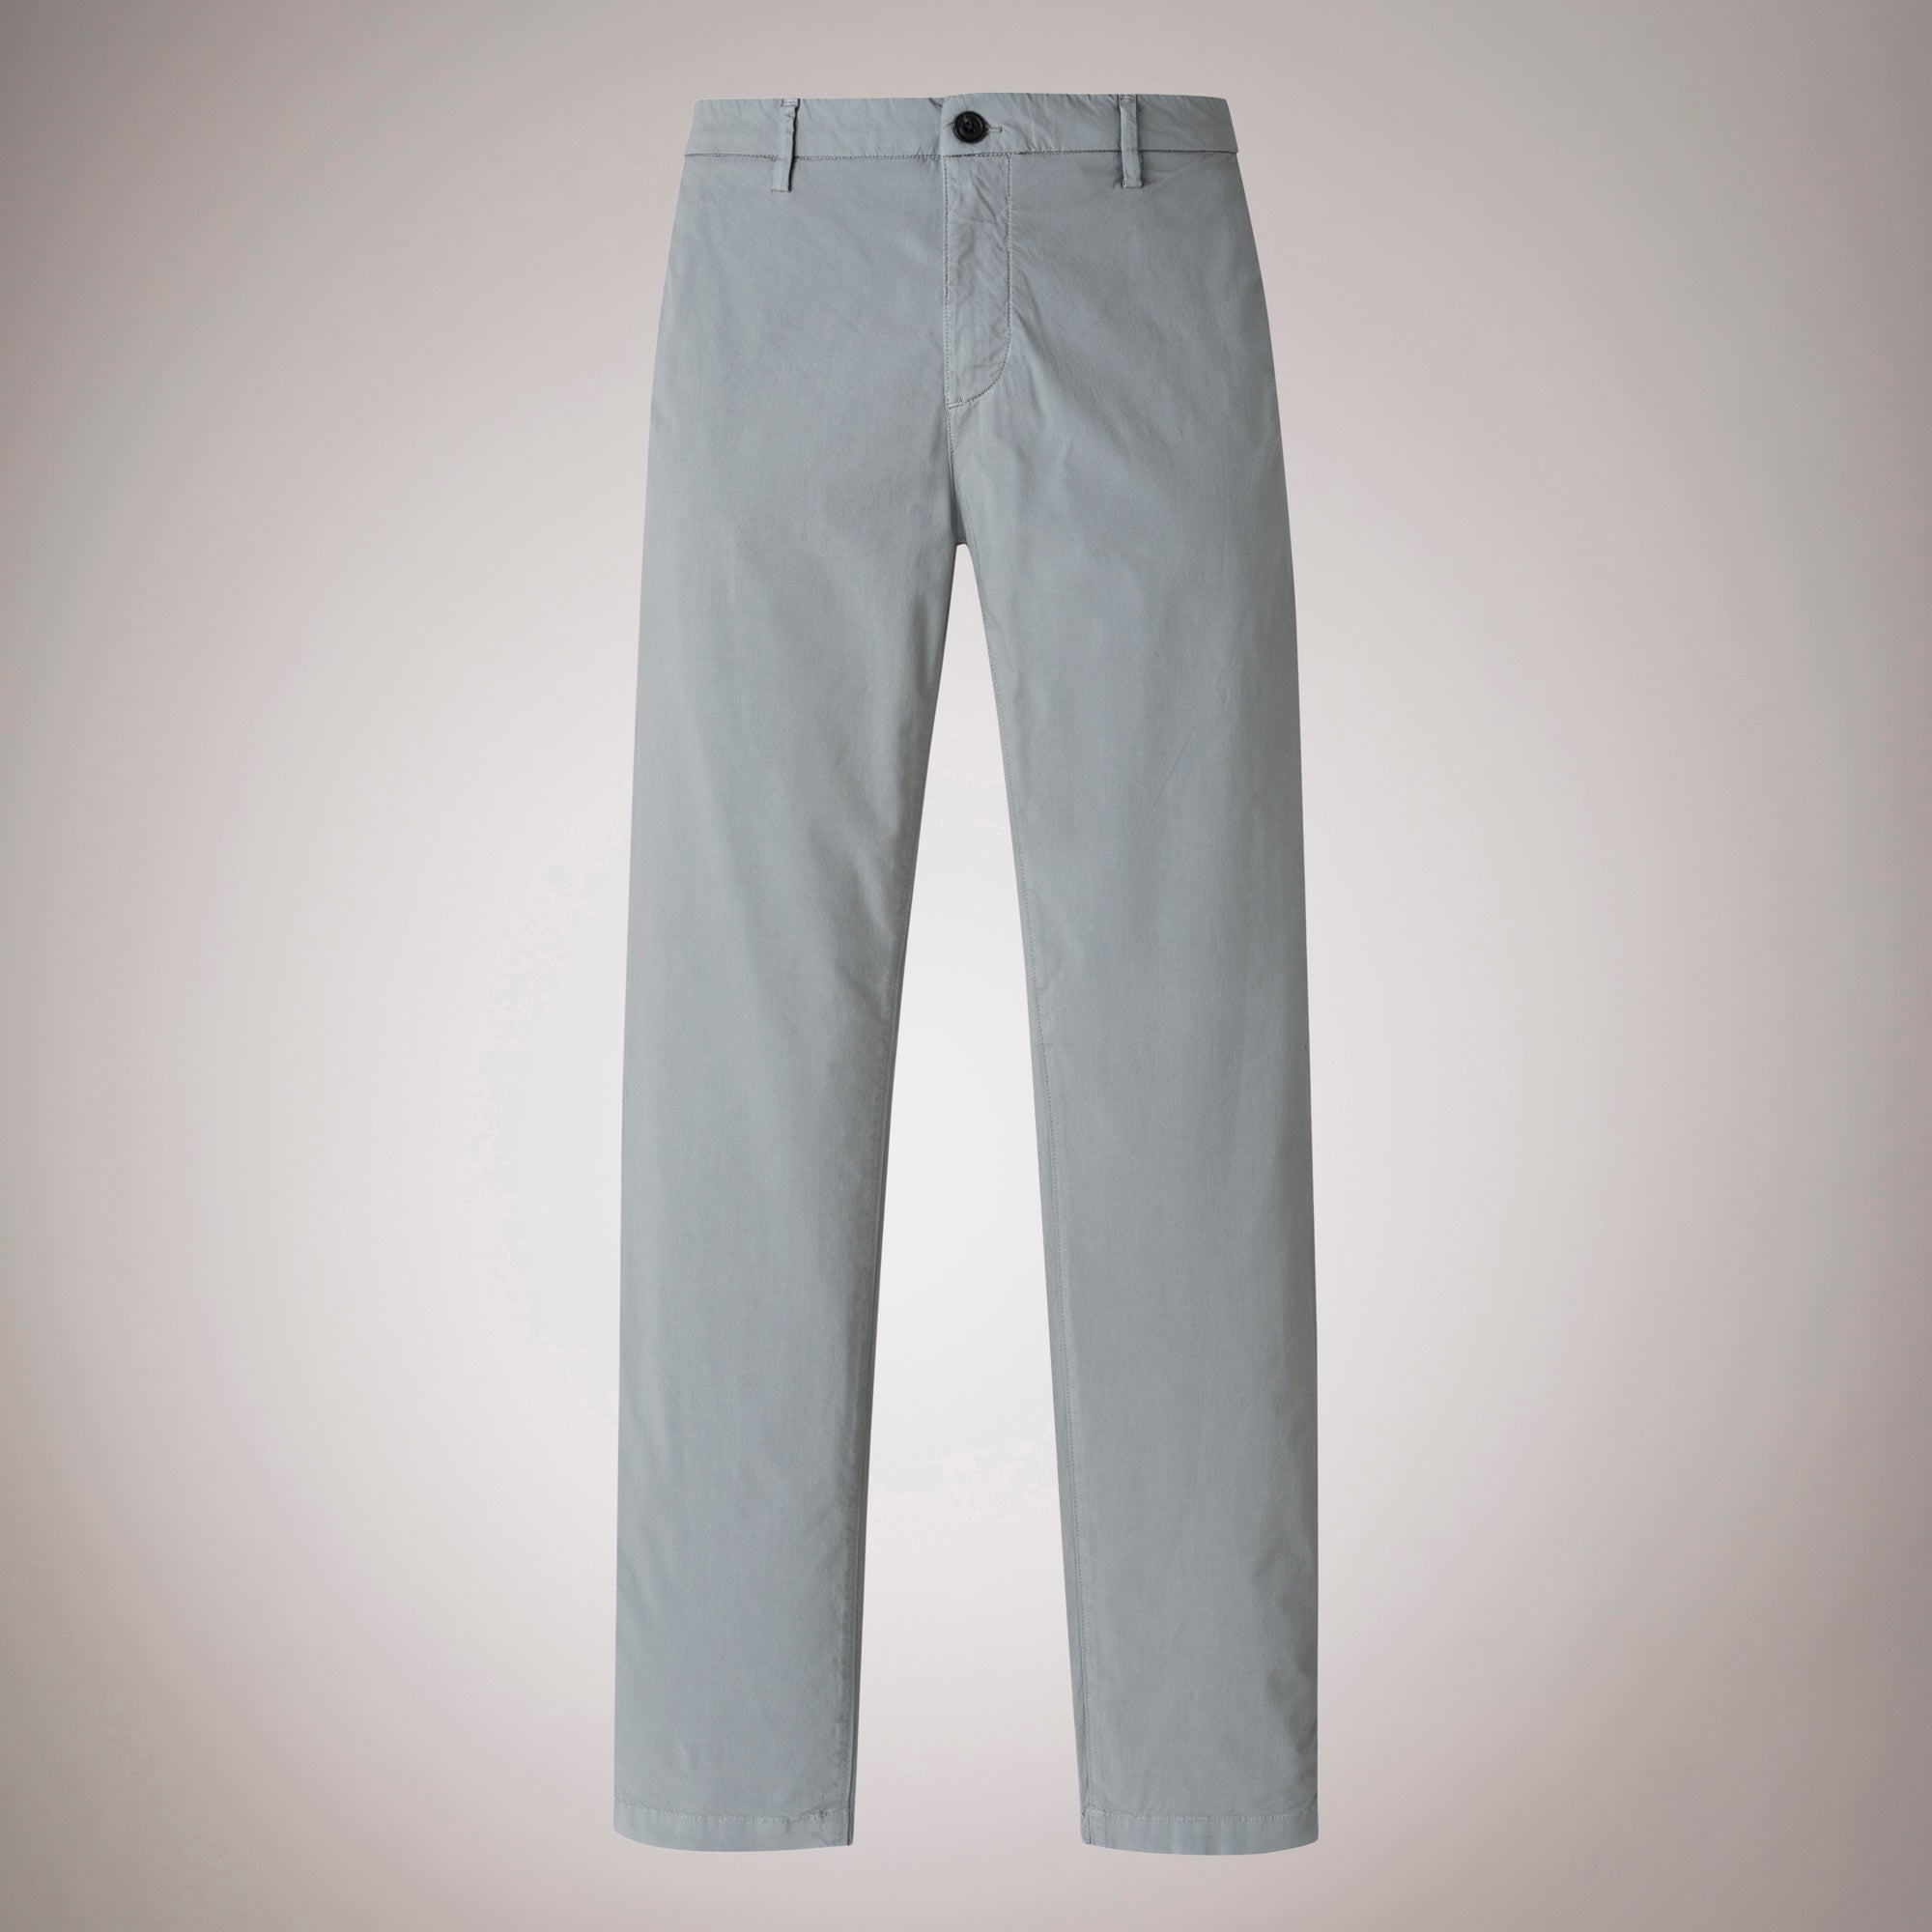 Chino trousers in stretch cotton poplin